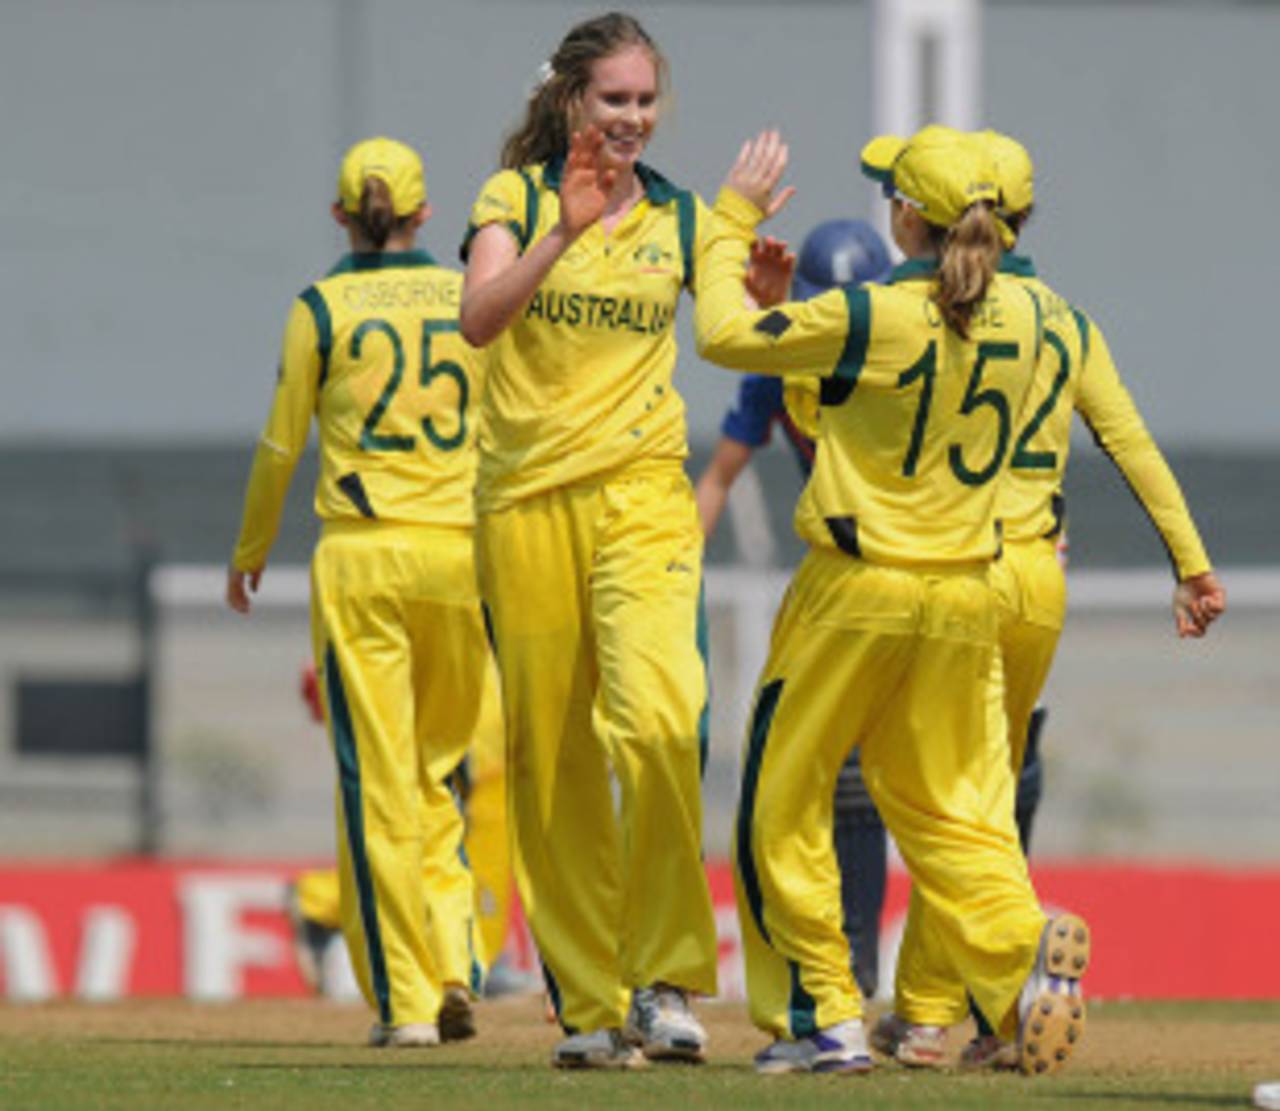 Holly Ferling took three wickets, Australia v England, Women's World Cup 2013, Super Six, Mumbai, February 8, 2013